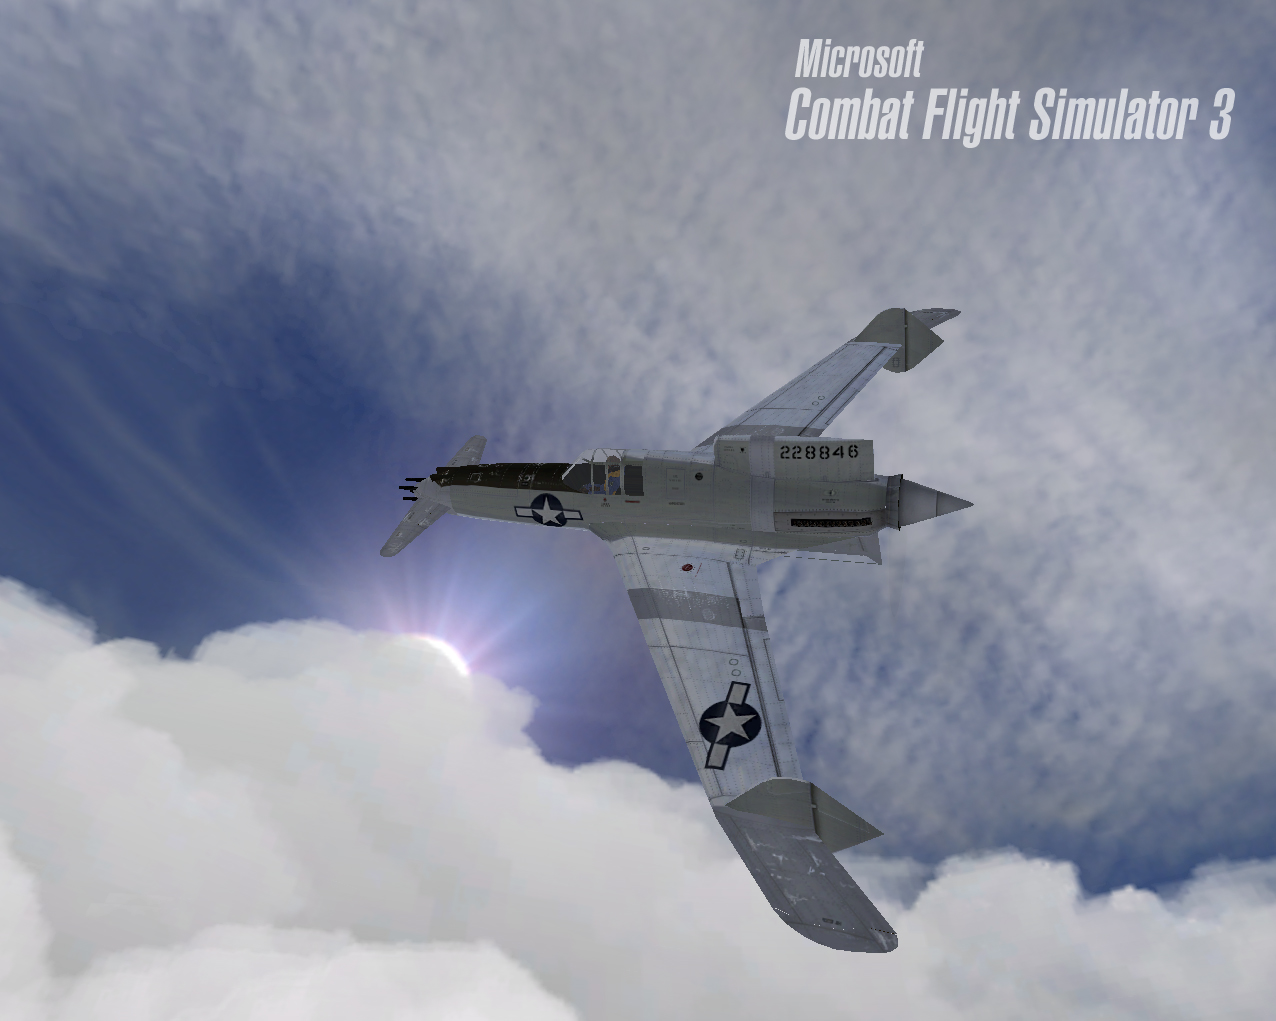 Combat flights. Combat Flight Simulator 3 Battle for Europe. Microsoft Combat Flight Simulator 3 Battle for Europe.